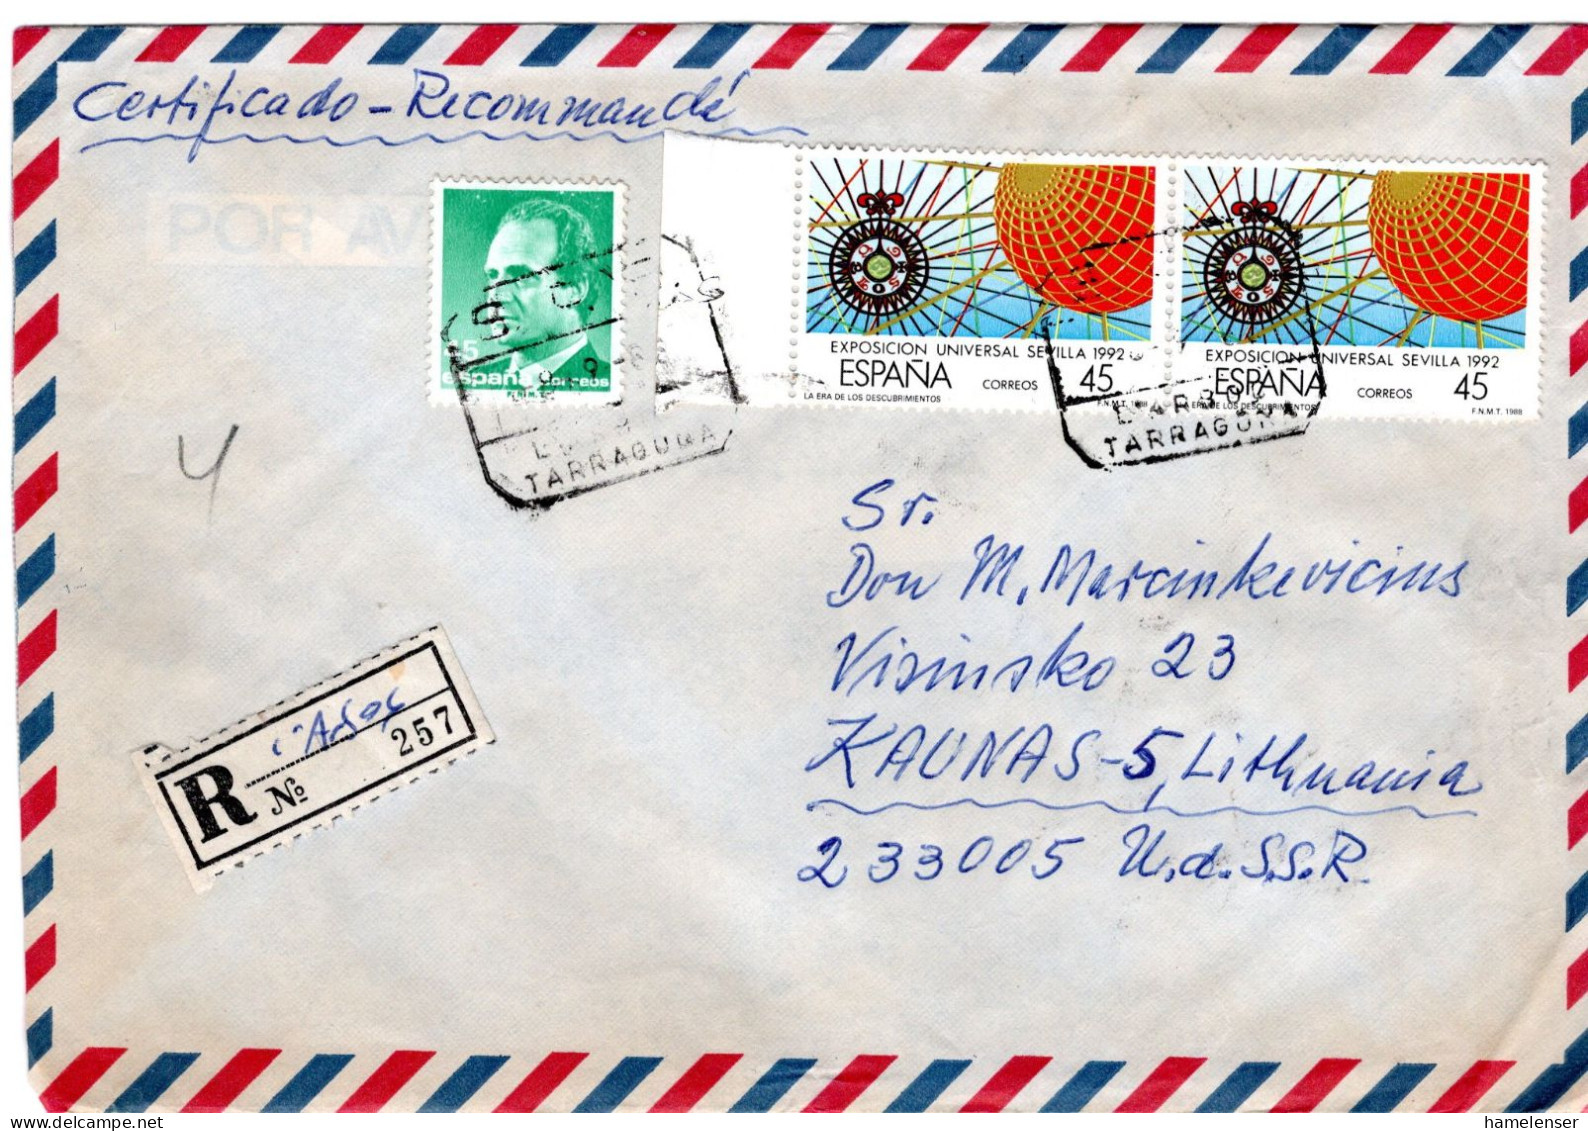 61809 - Spanien - 1988 - 2@45Ptas EXPO '92 MiF A R-LpBf TARRAGONA -> KAUNAS (UdSSR), U Etw Verfaerbt - Lettres & Documents